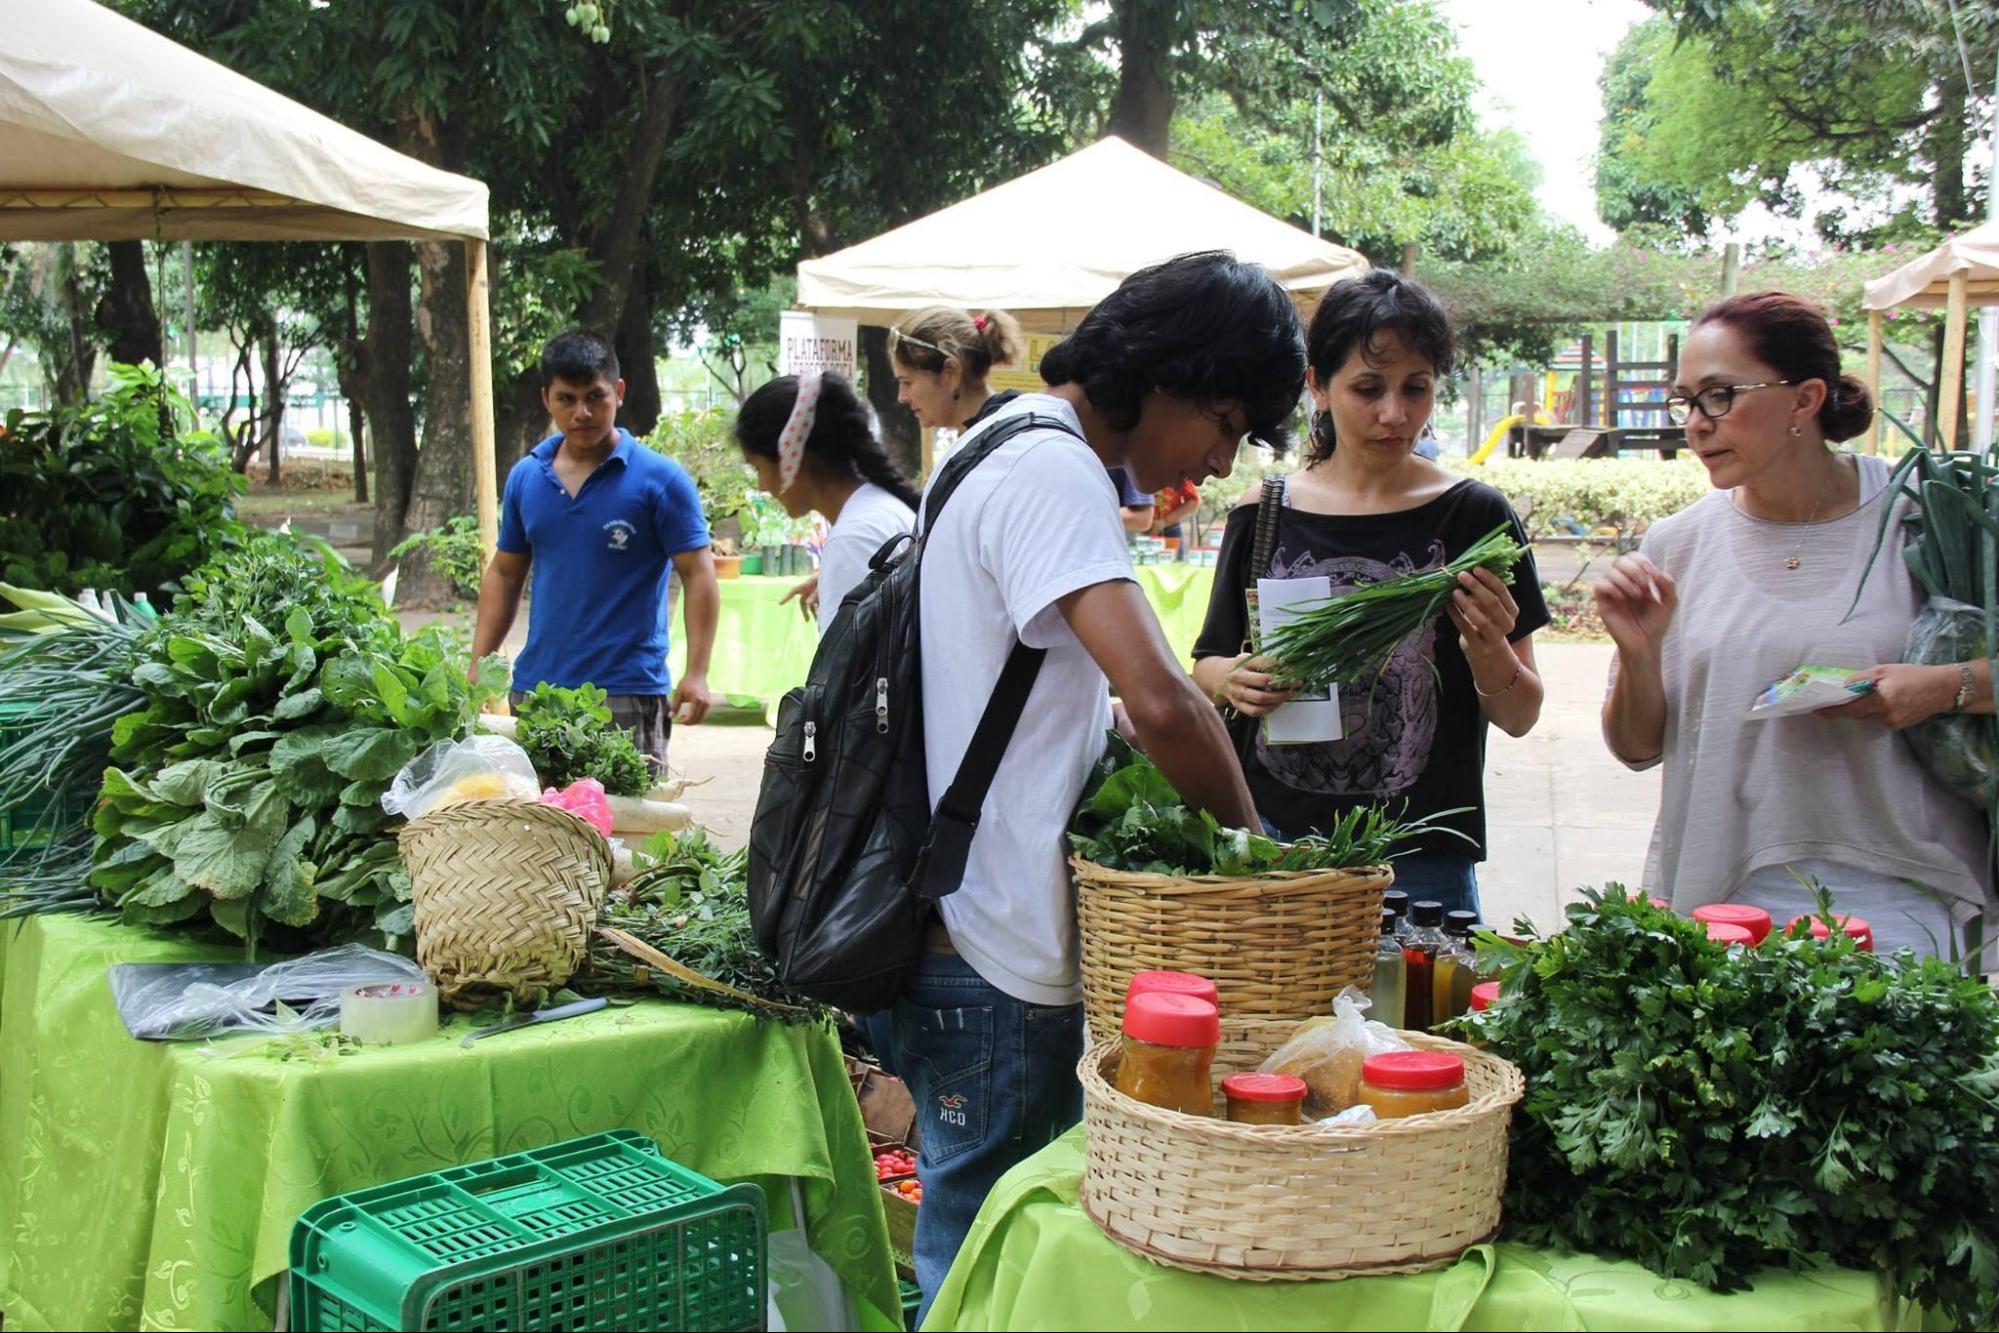 Agroecological fair in the city of Santa Cruz de la Sierra, 2016. Photo: Plataforma Agroecológica.